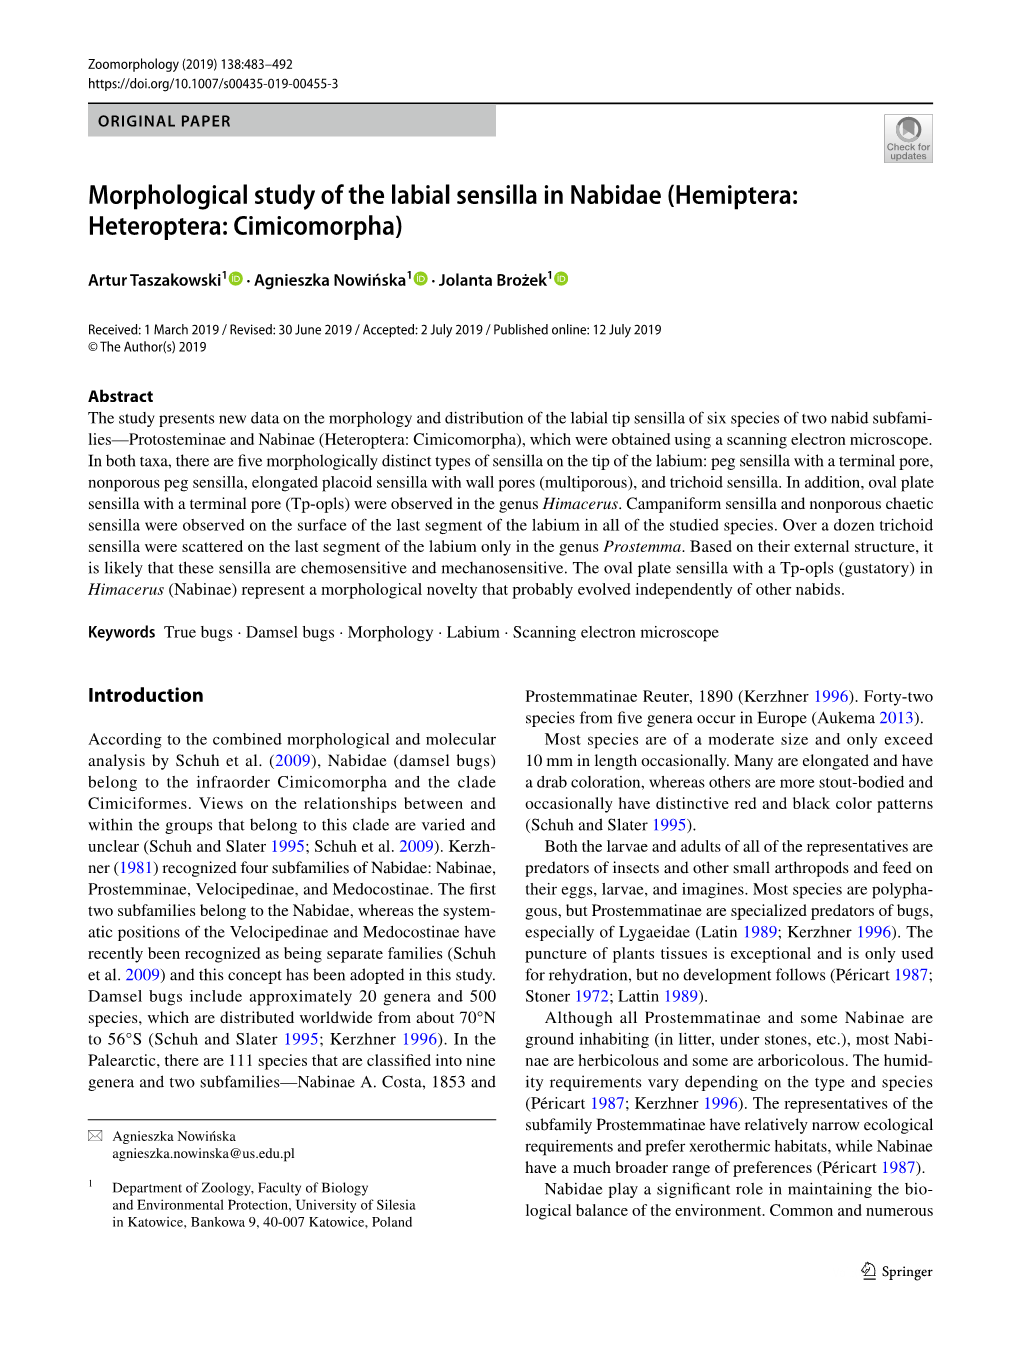 Morphological Study of the Labial Sensilla in Nabidae (Hemiptera: Heteroptera: Cimicomorpha)